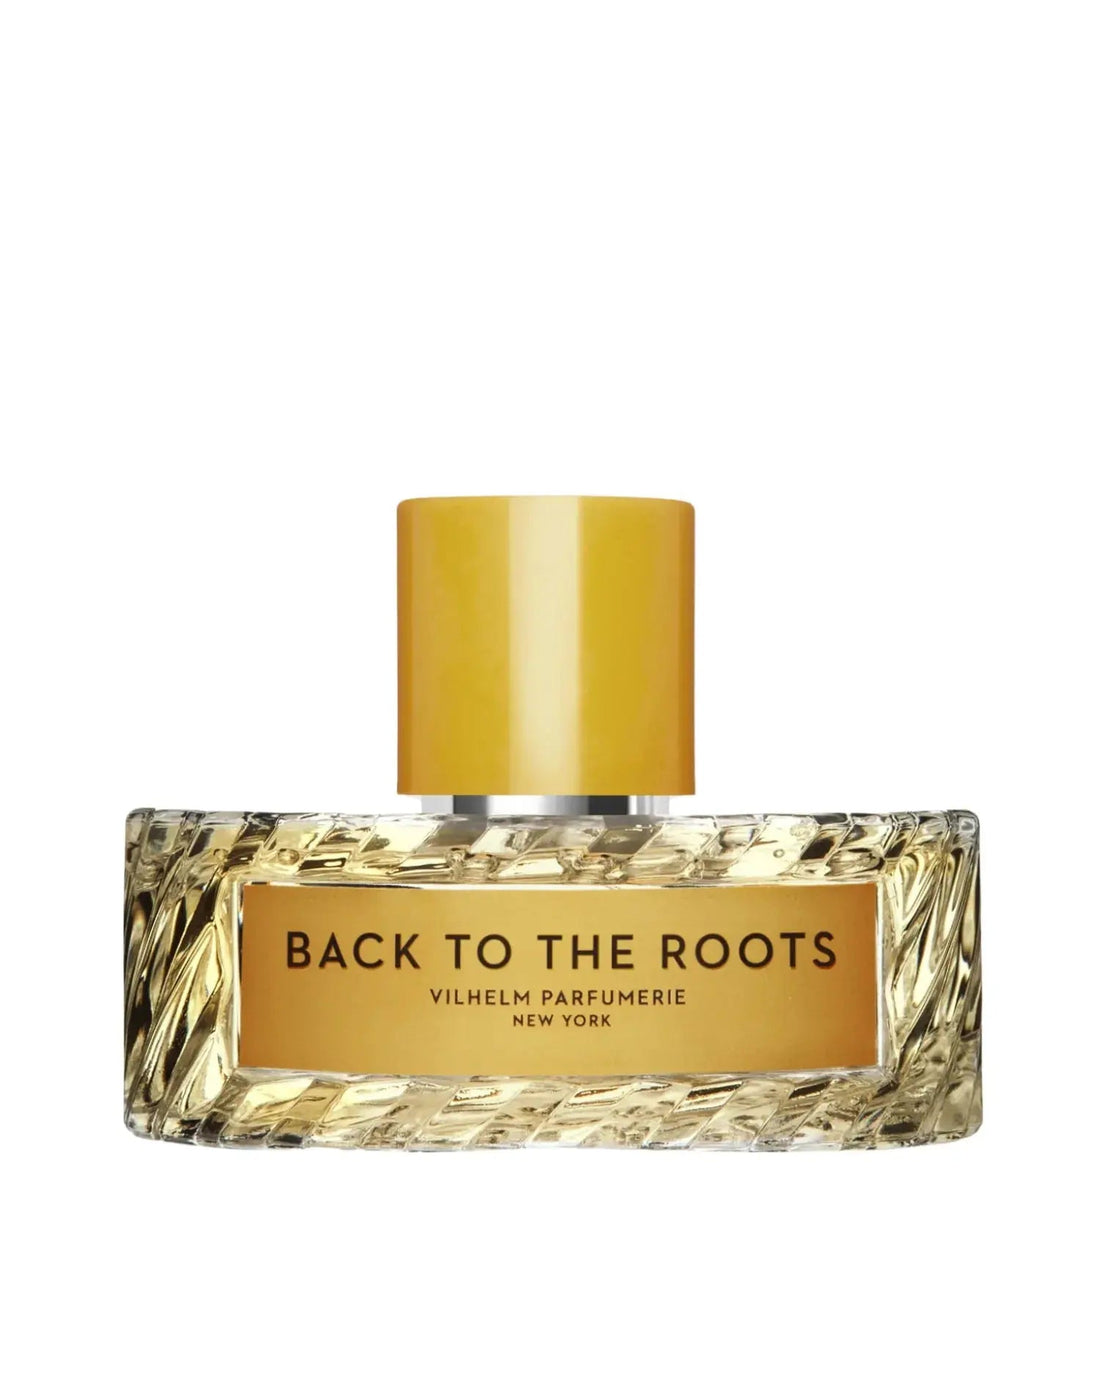 Back to the roots Vilhelm parfumerie - 100 ml